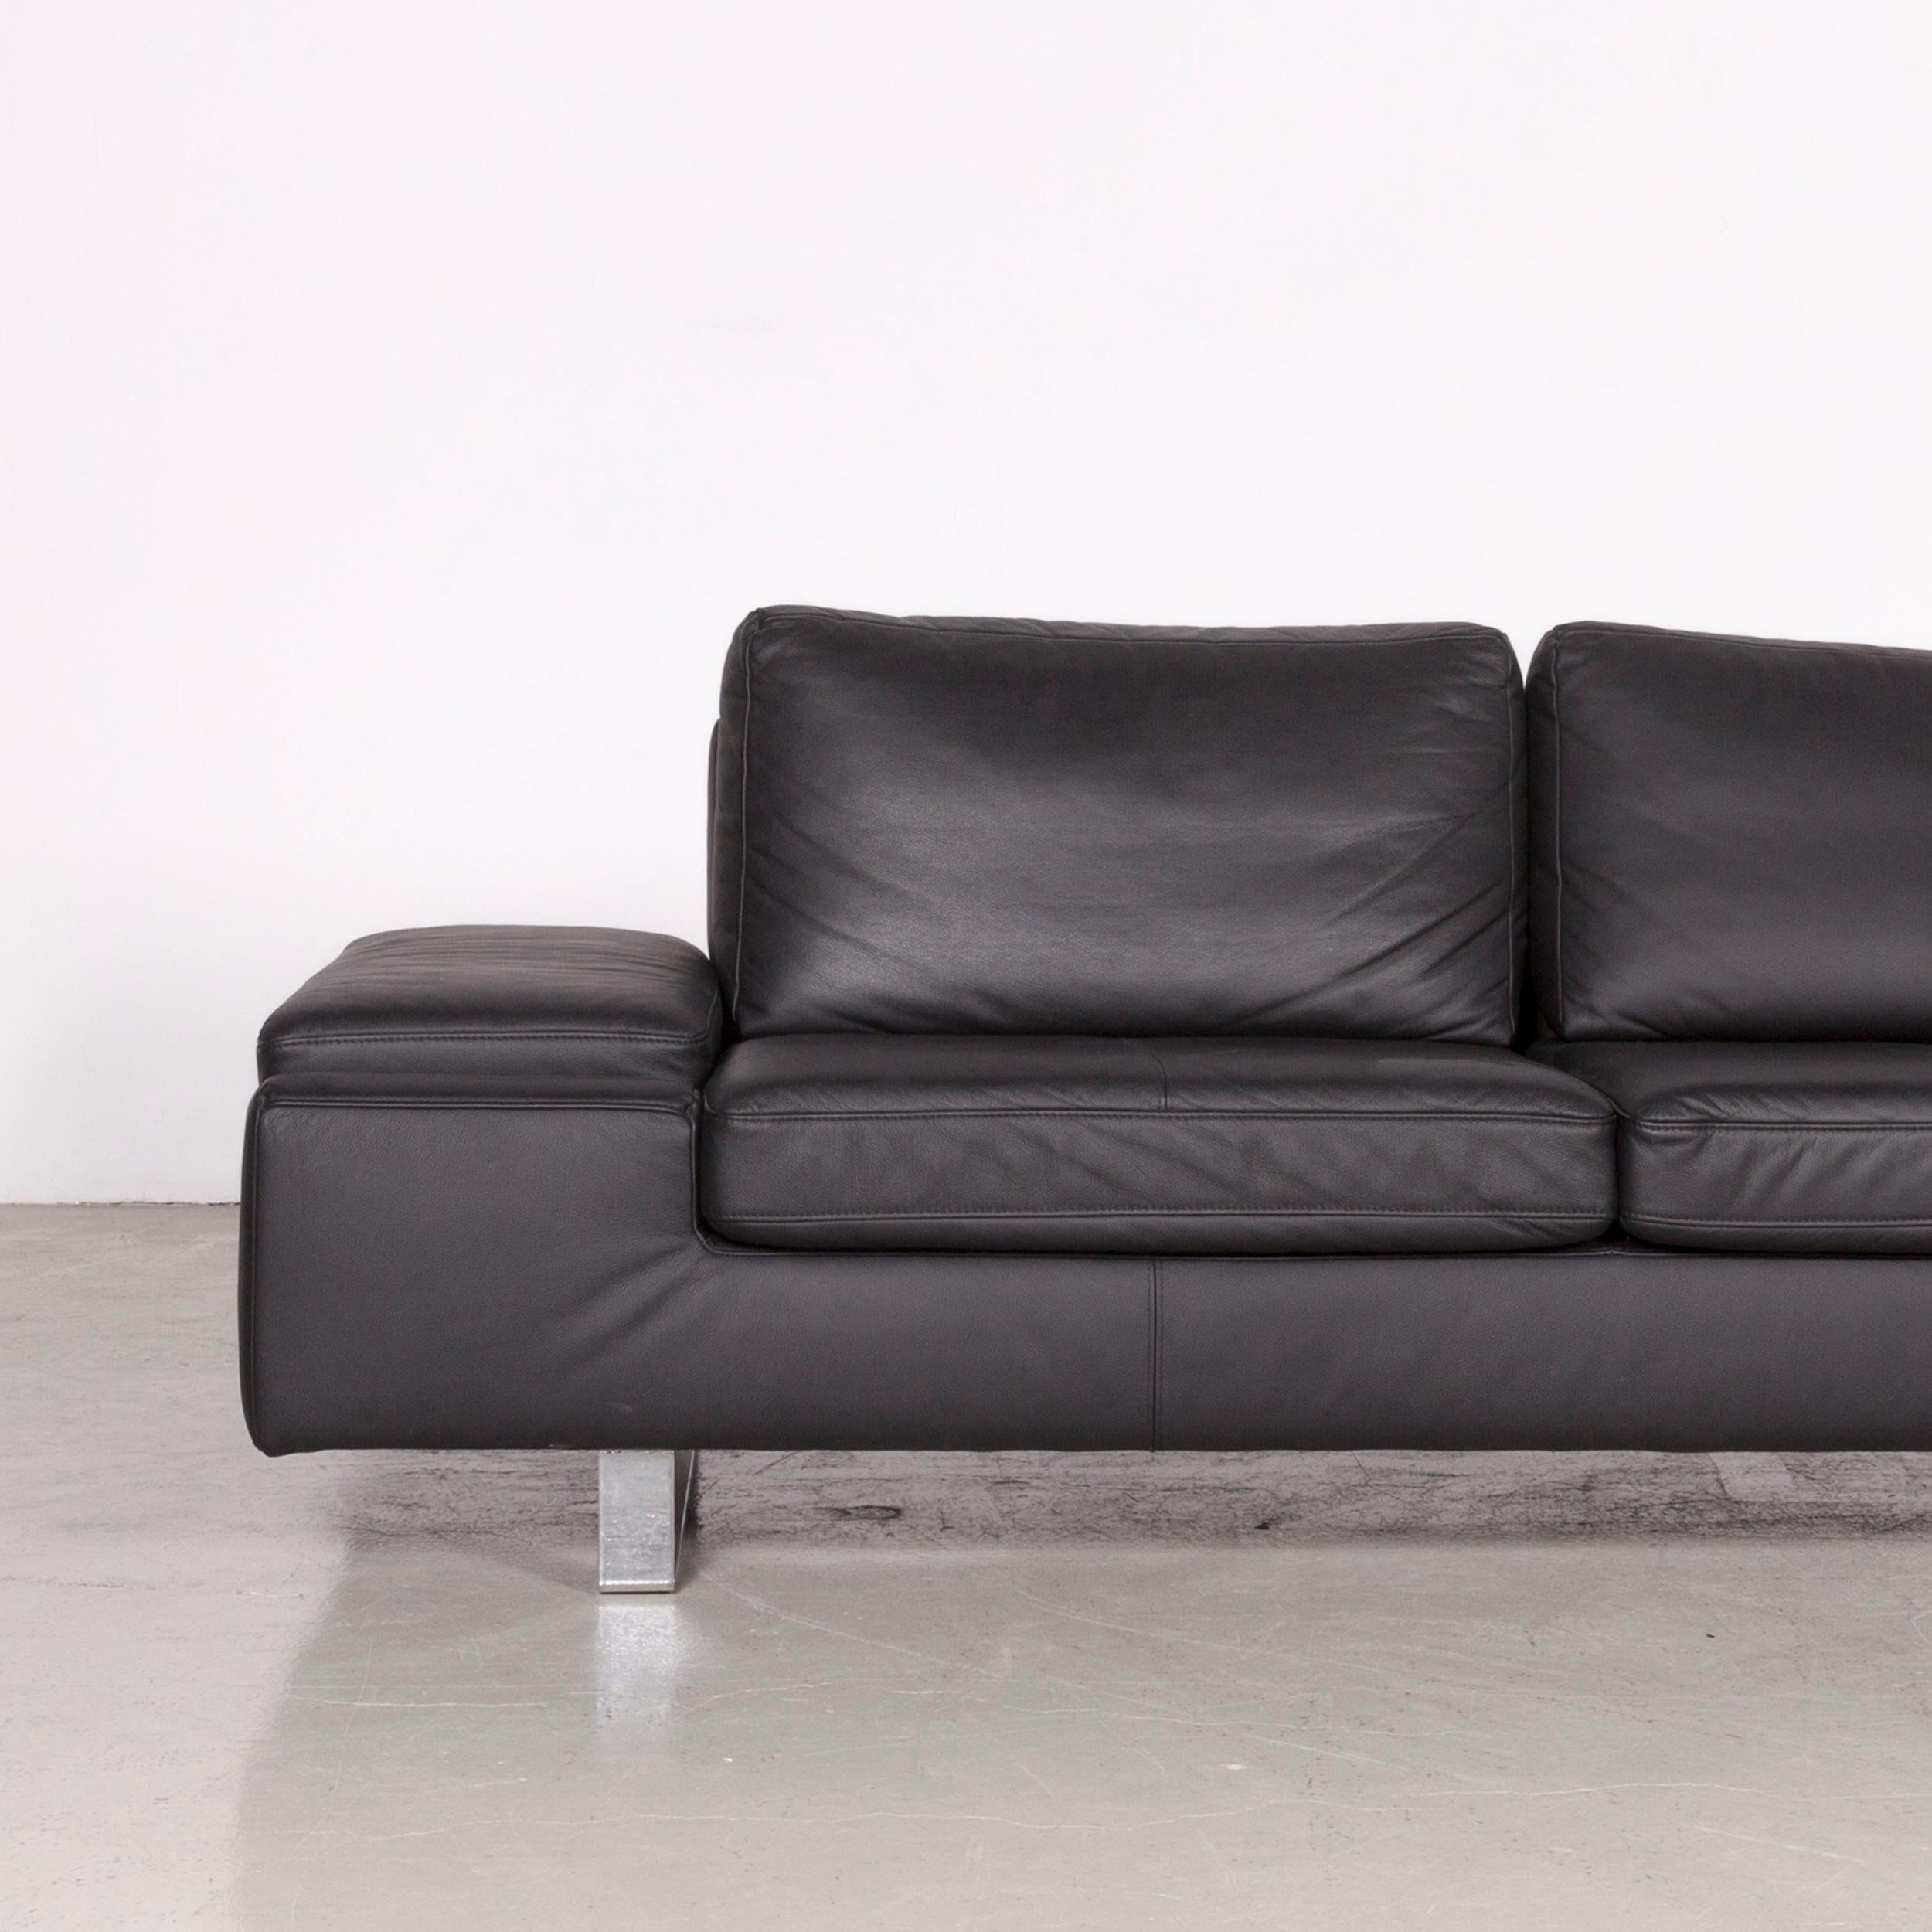 Arte M Designer Leather Sofa Black Three-Seat Couch Modern For Sale 1